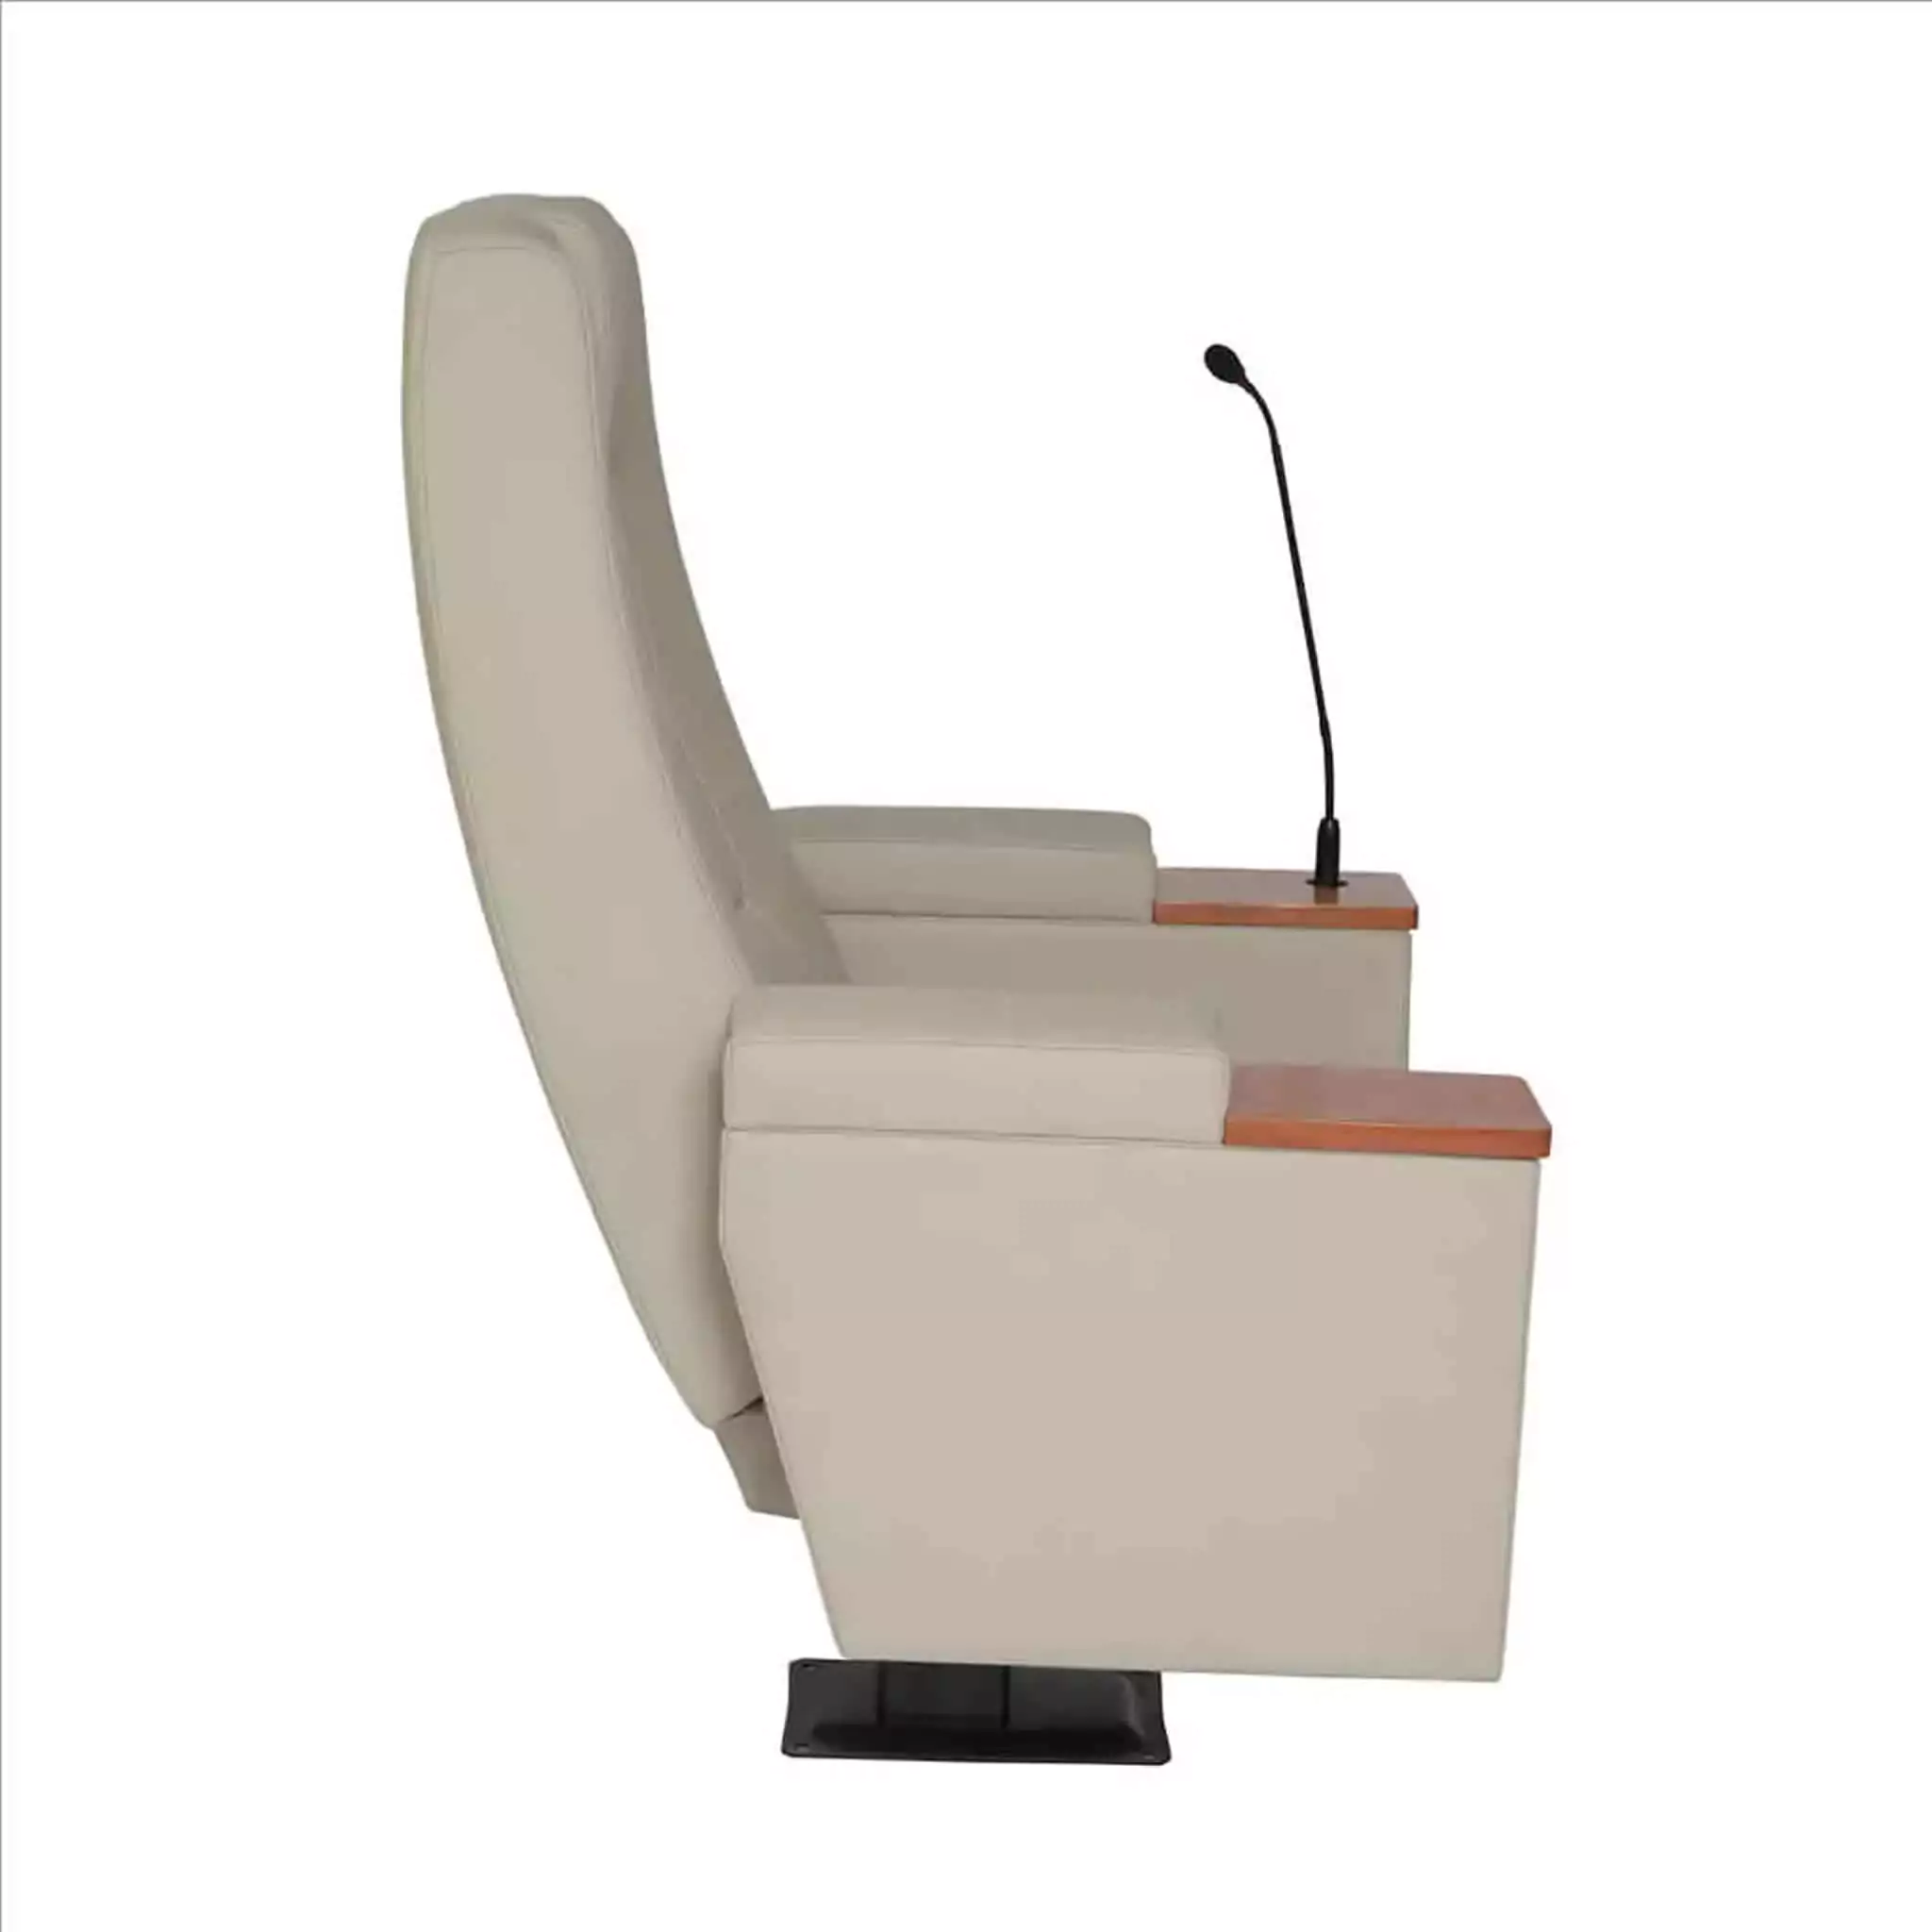 Seat Model: AMETIST